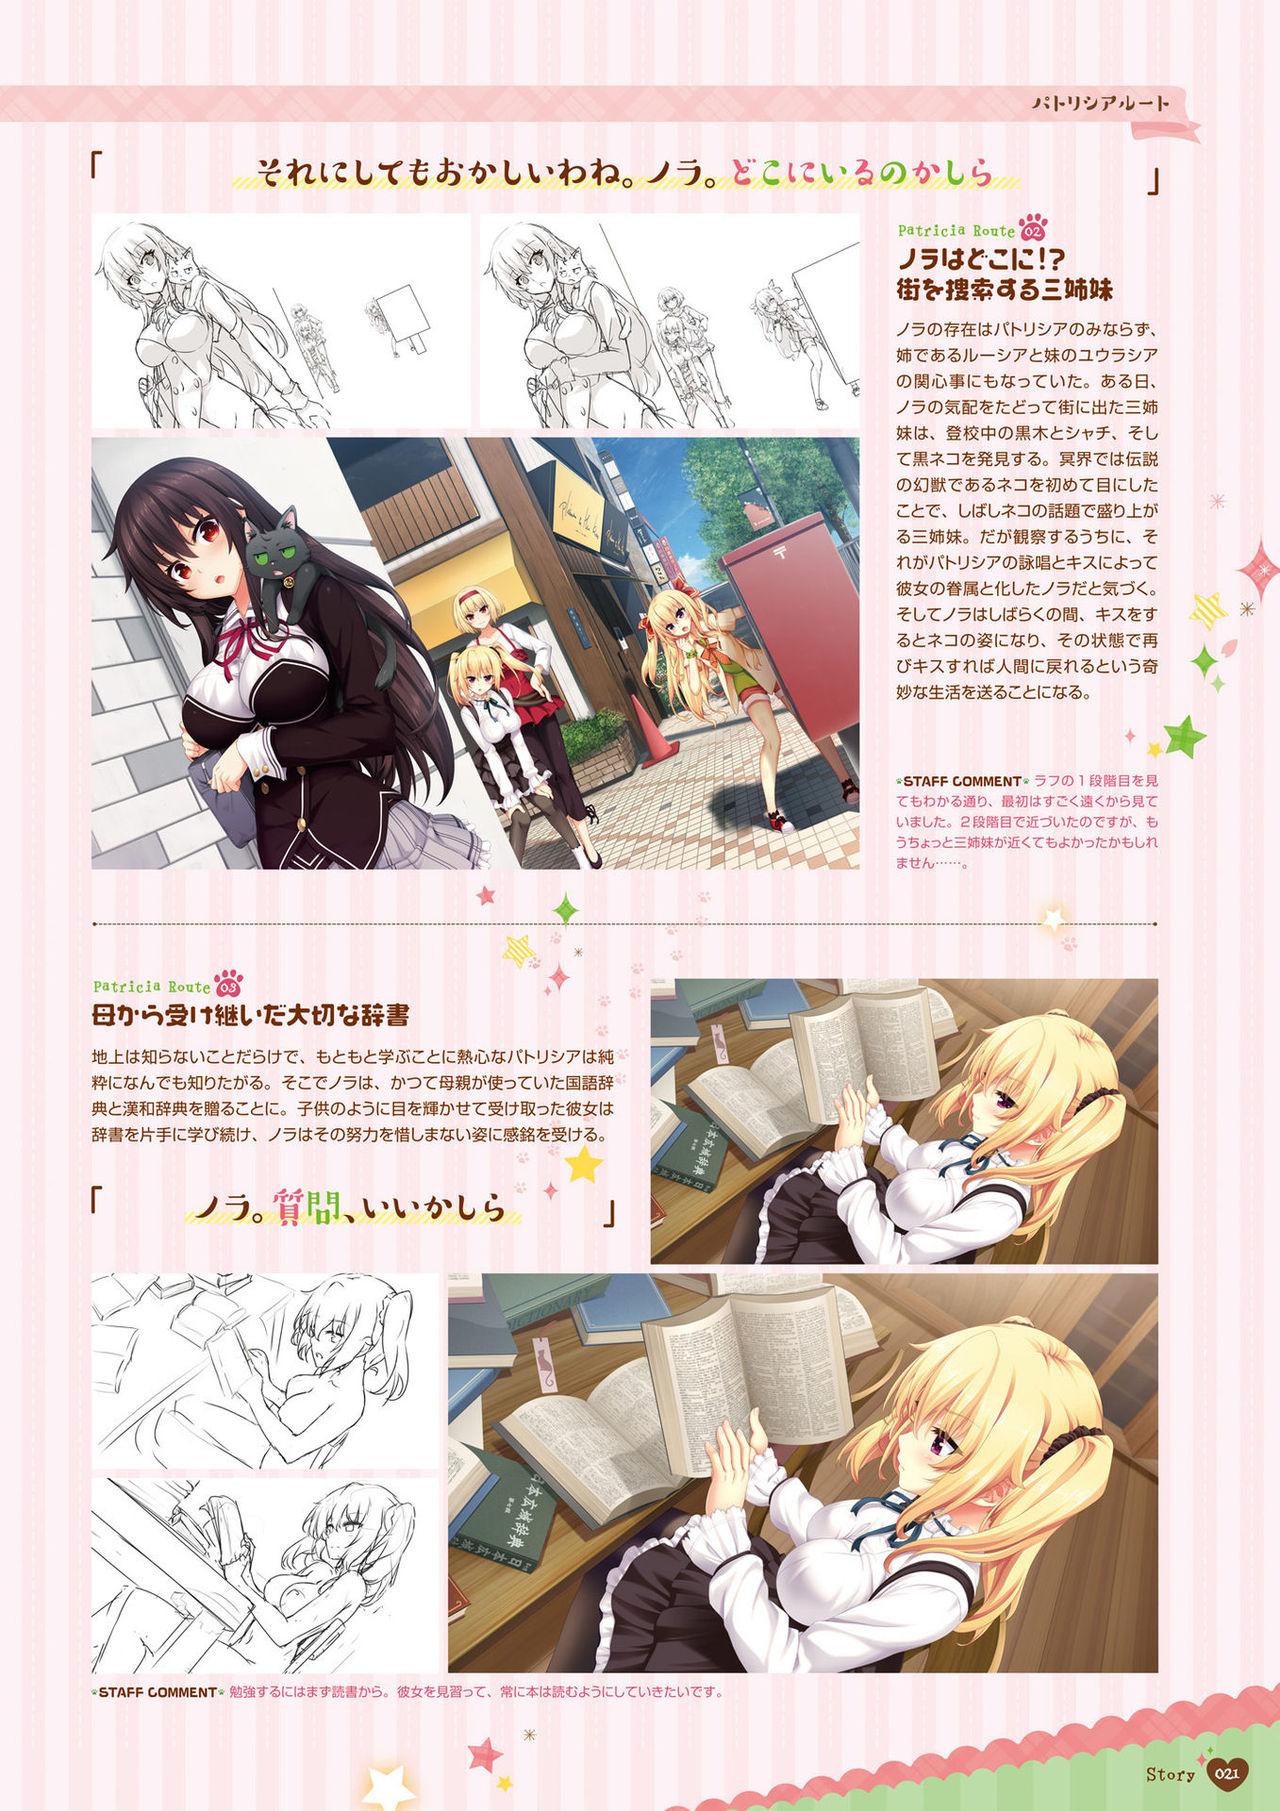 [HARUKAZE] Nora to Oujo to Noraneko Heart -Nora, Princess, and Stray Cat.- Visual Fan Book [Digital] 20